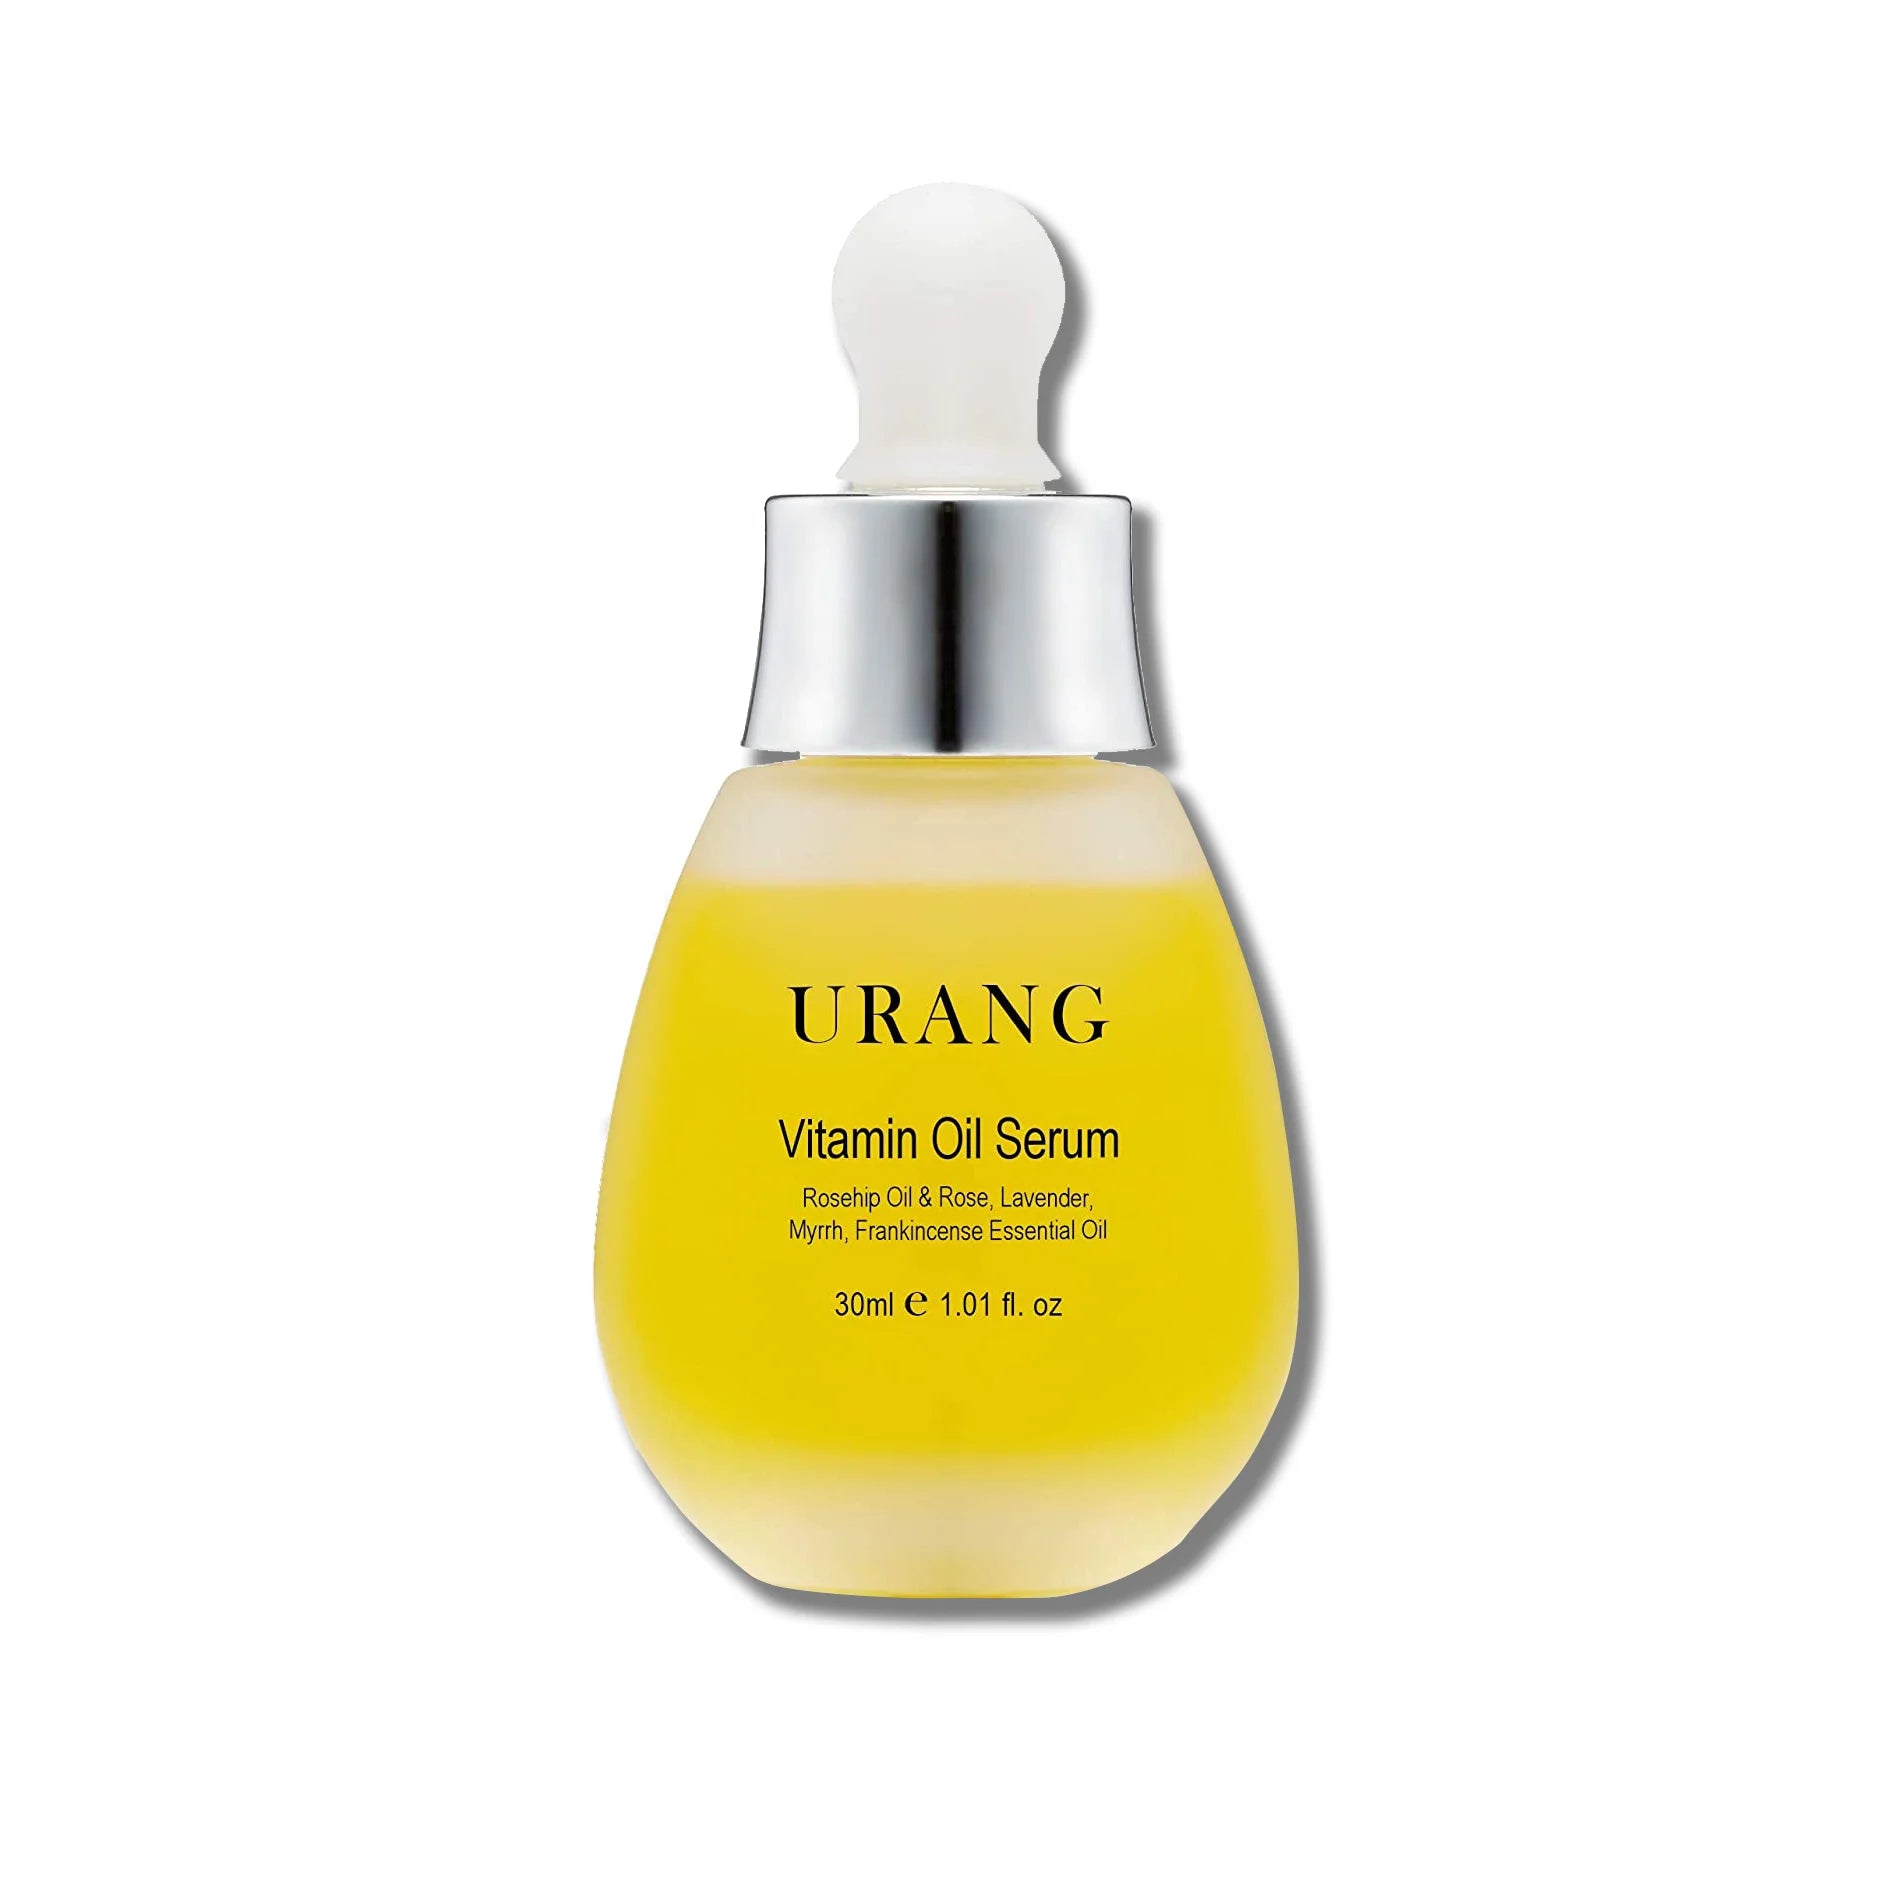 Urang Vitamin Oil Serum anti-aging natural cosmetics Korean face care luxury gift K Beauty World